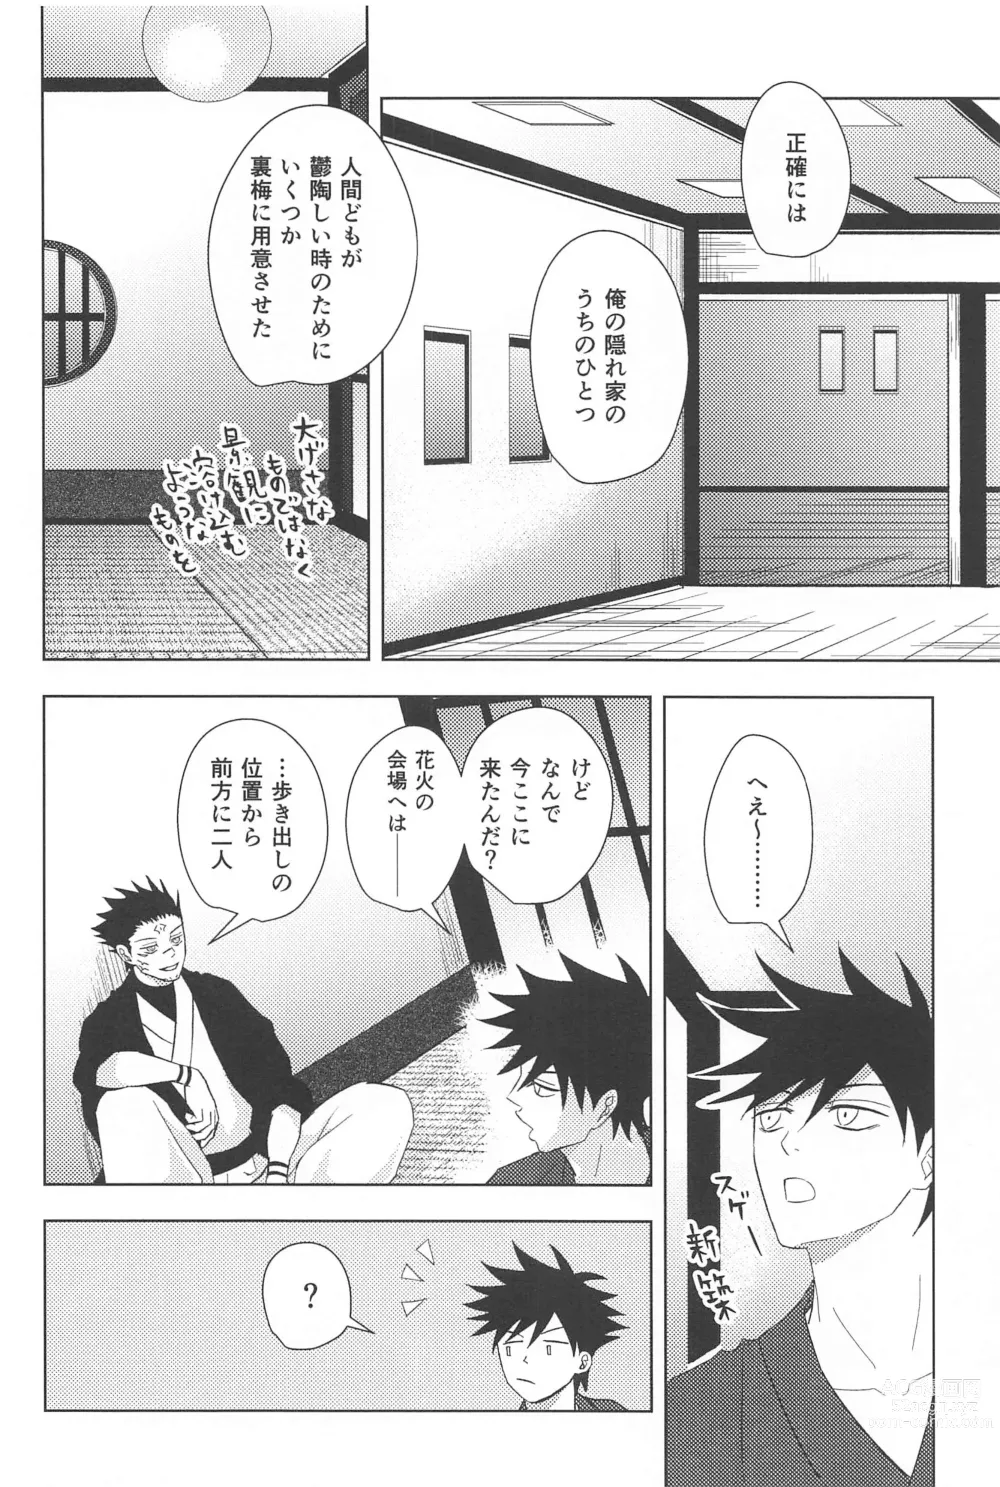 Page 16 of doujinshi Kakurega nite